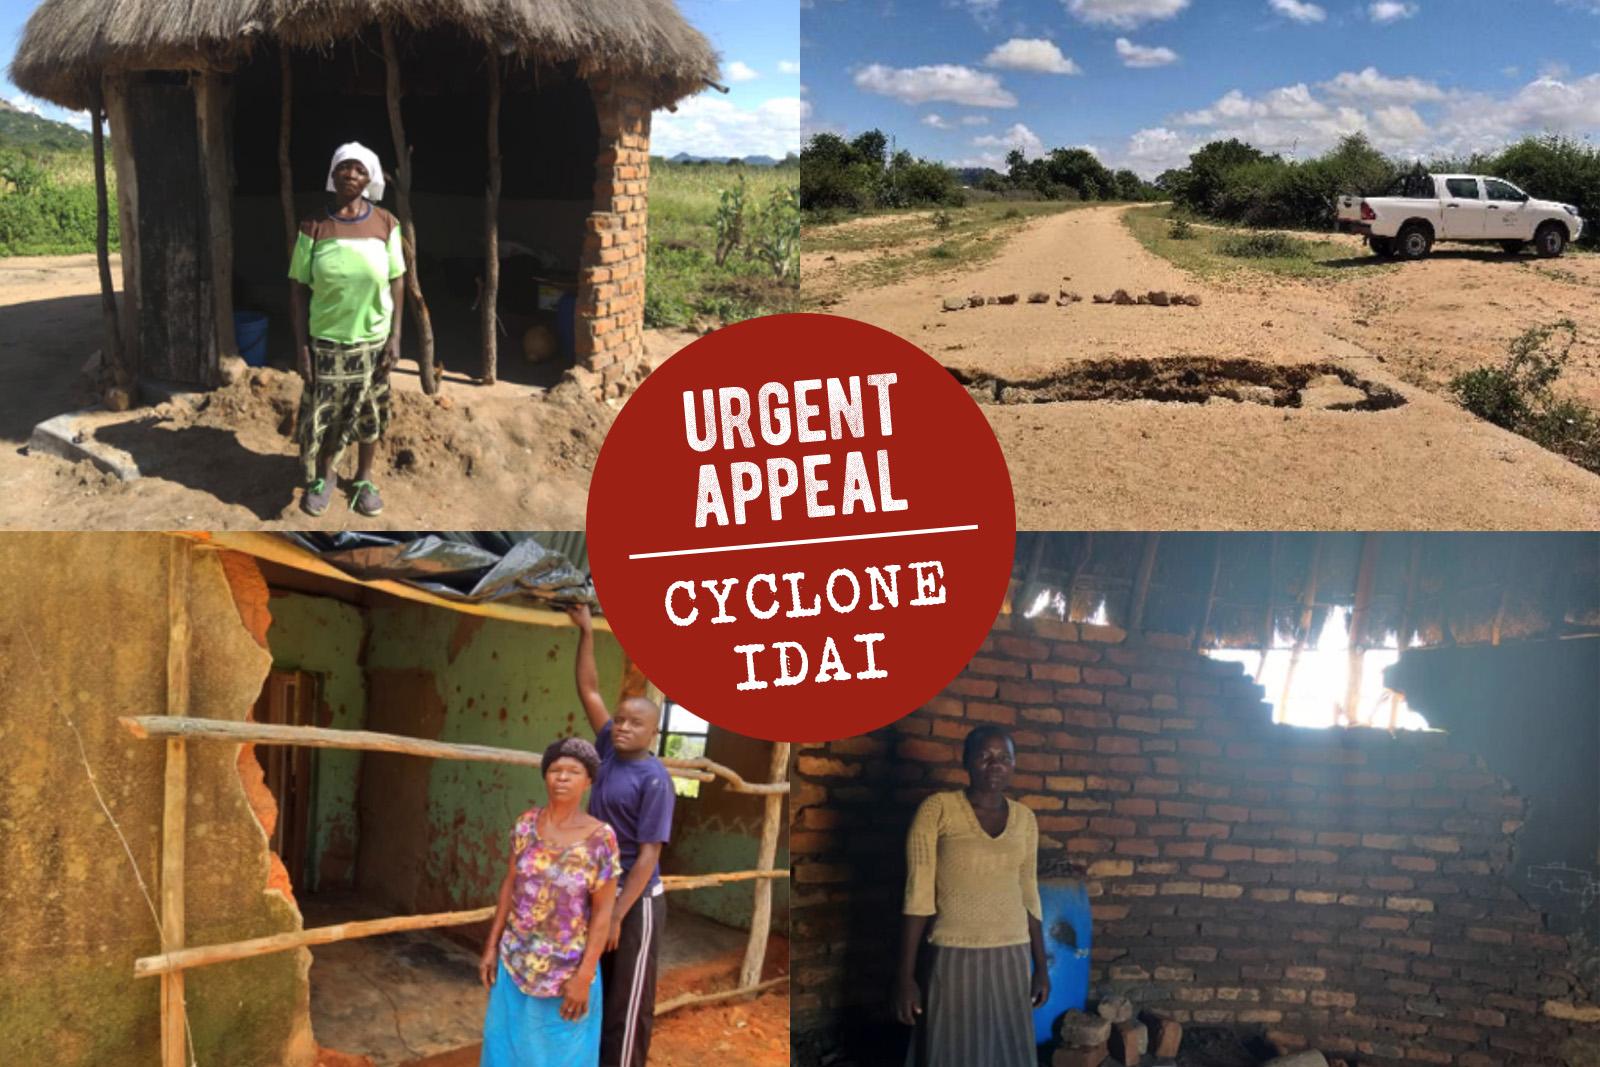 Urgent Appeal Cyclone IDAI